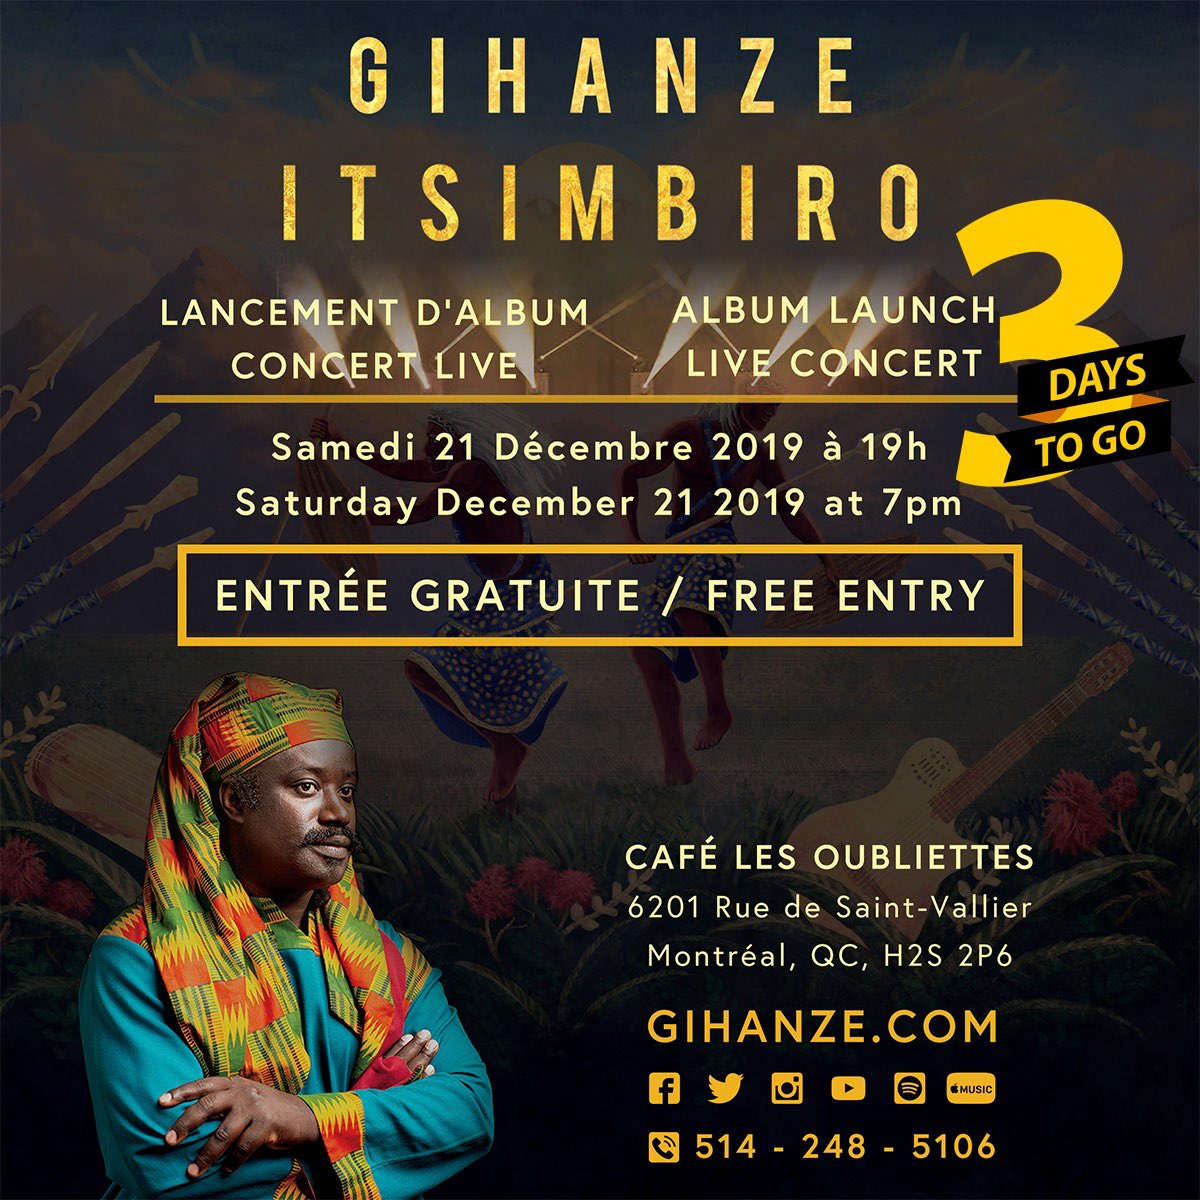 GIHANZE “ITSIMBIRO” album launch live show. facebook.com/events/2461620… #gihanze #blues #africanblues #worldmusic #africanmusic #traditionalmusic #rwandamusic #visitrwanda